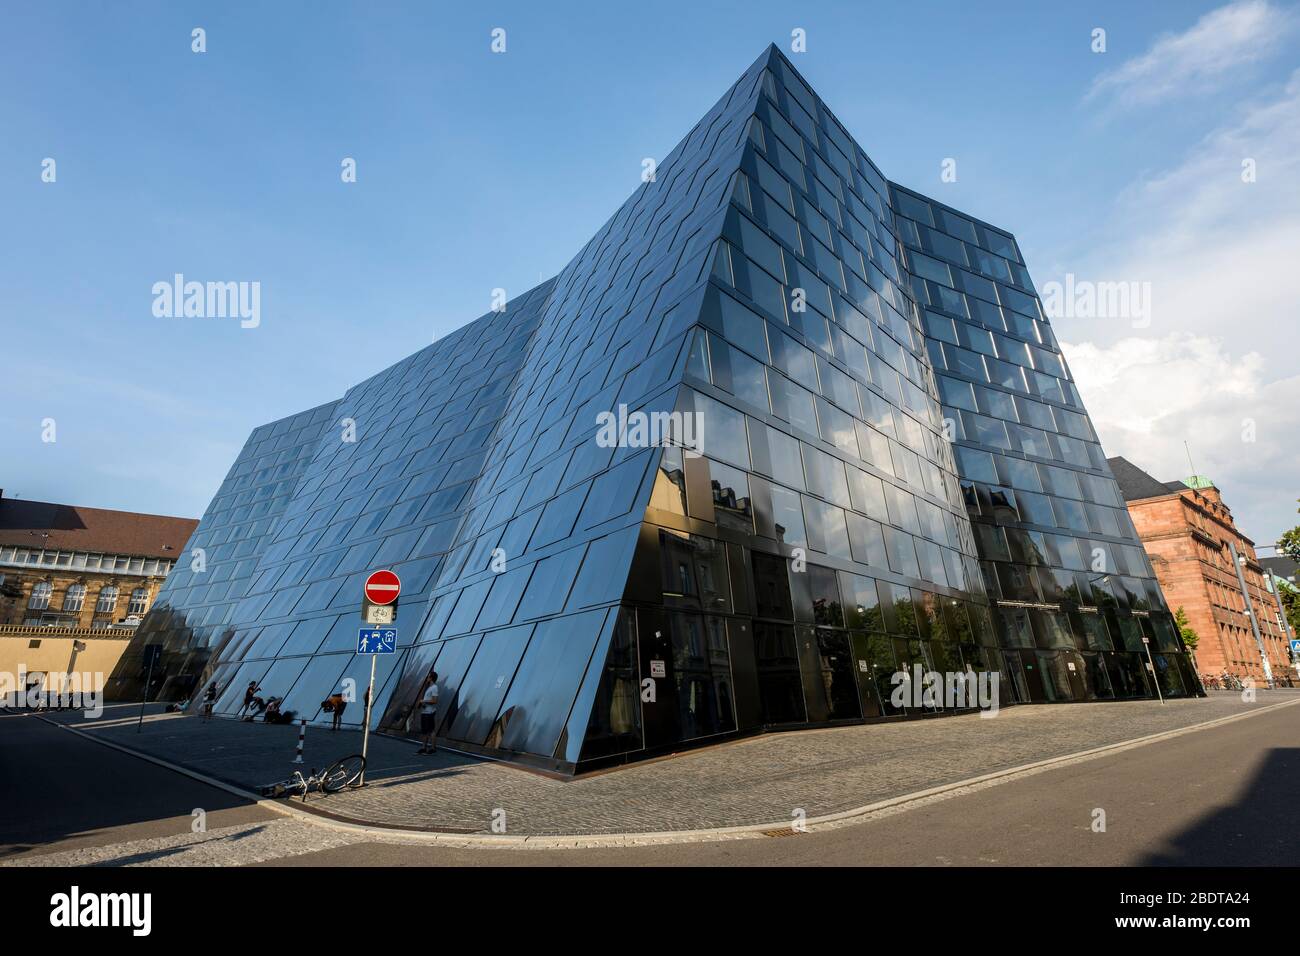 University Library Freiburg, new building, at the Platz der UniversitŠt, Freiburg im Breisgau, Germany, Stock Photo